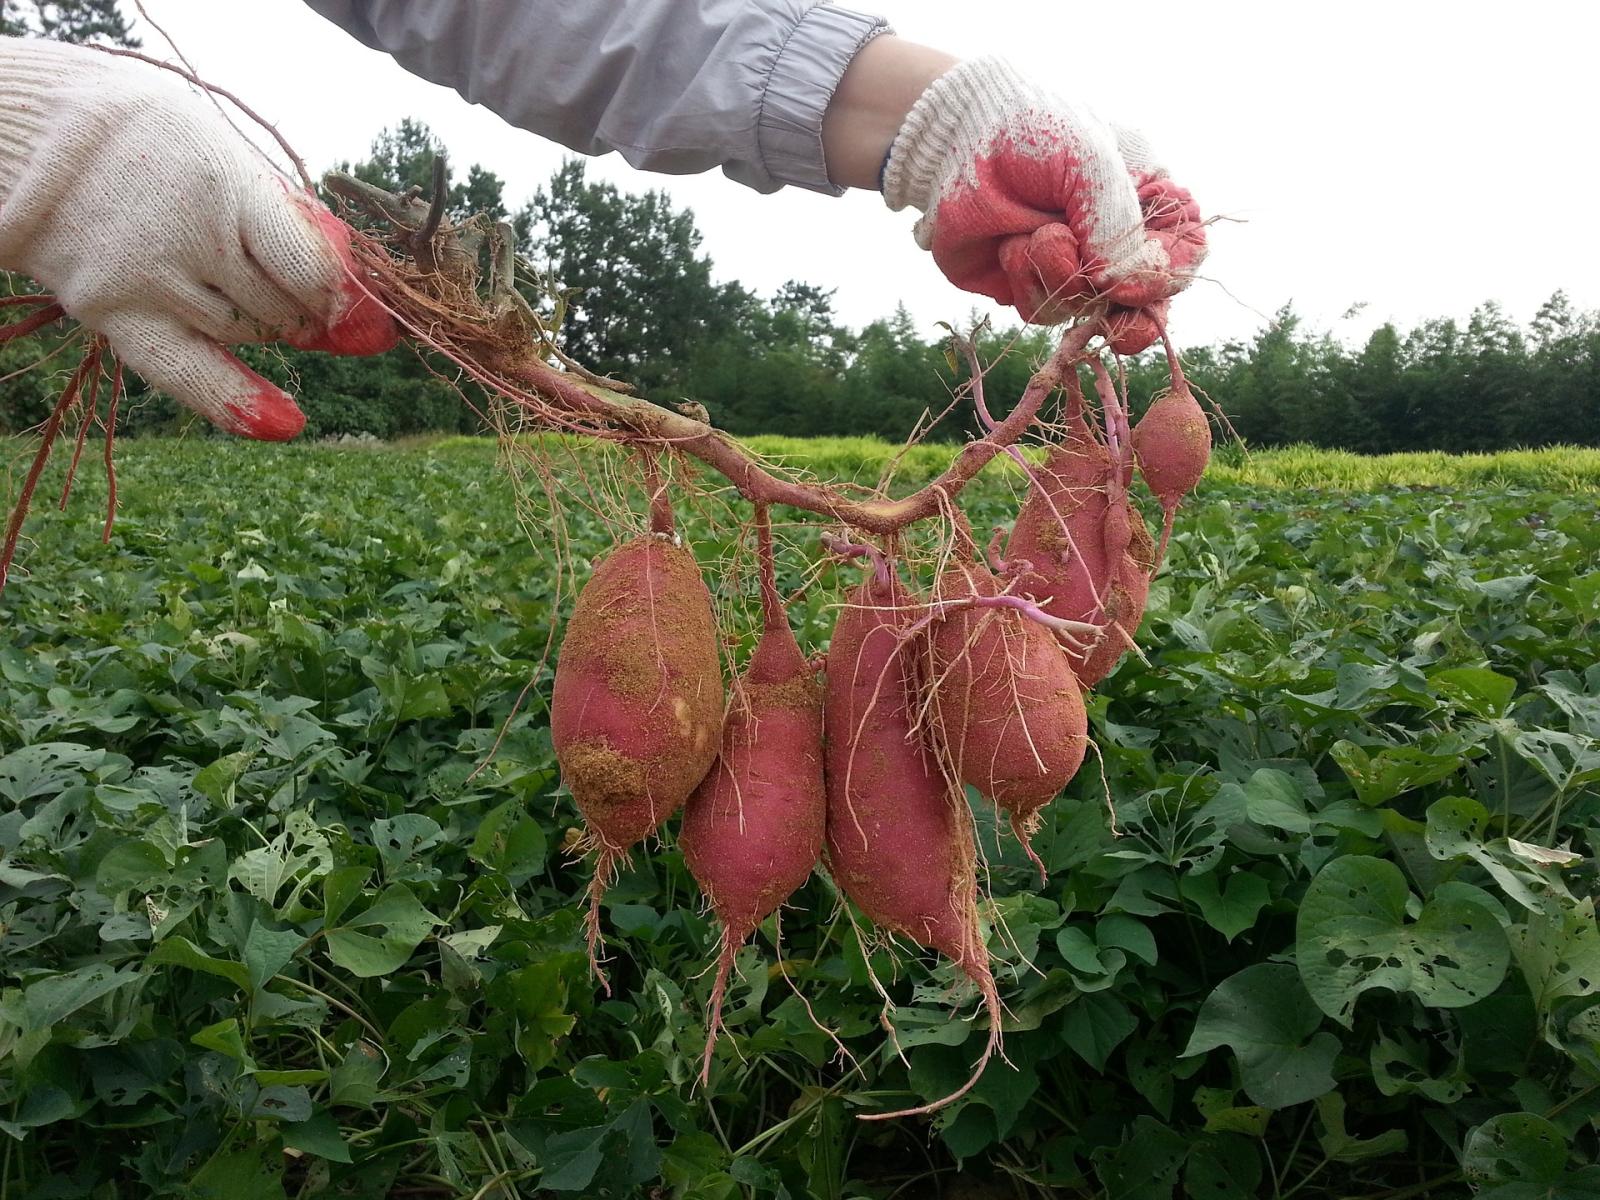 Picture of sweet potato harvest.